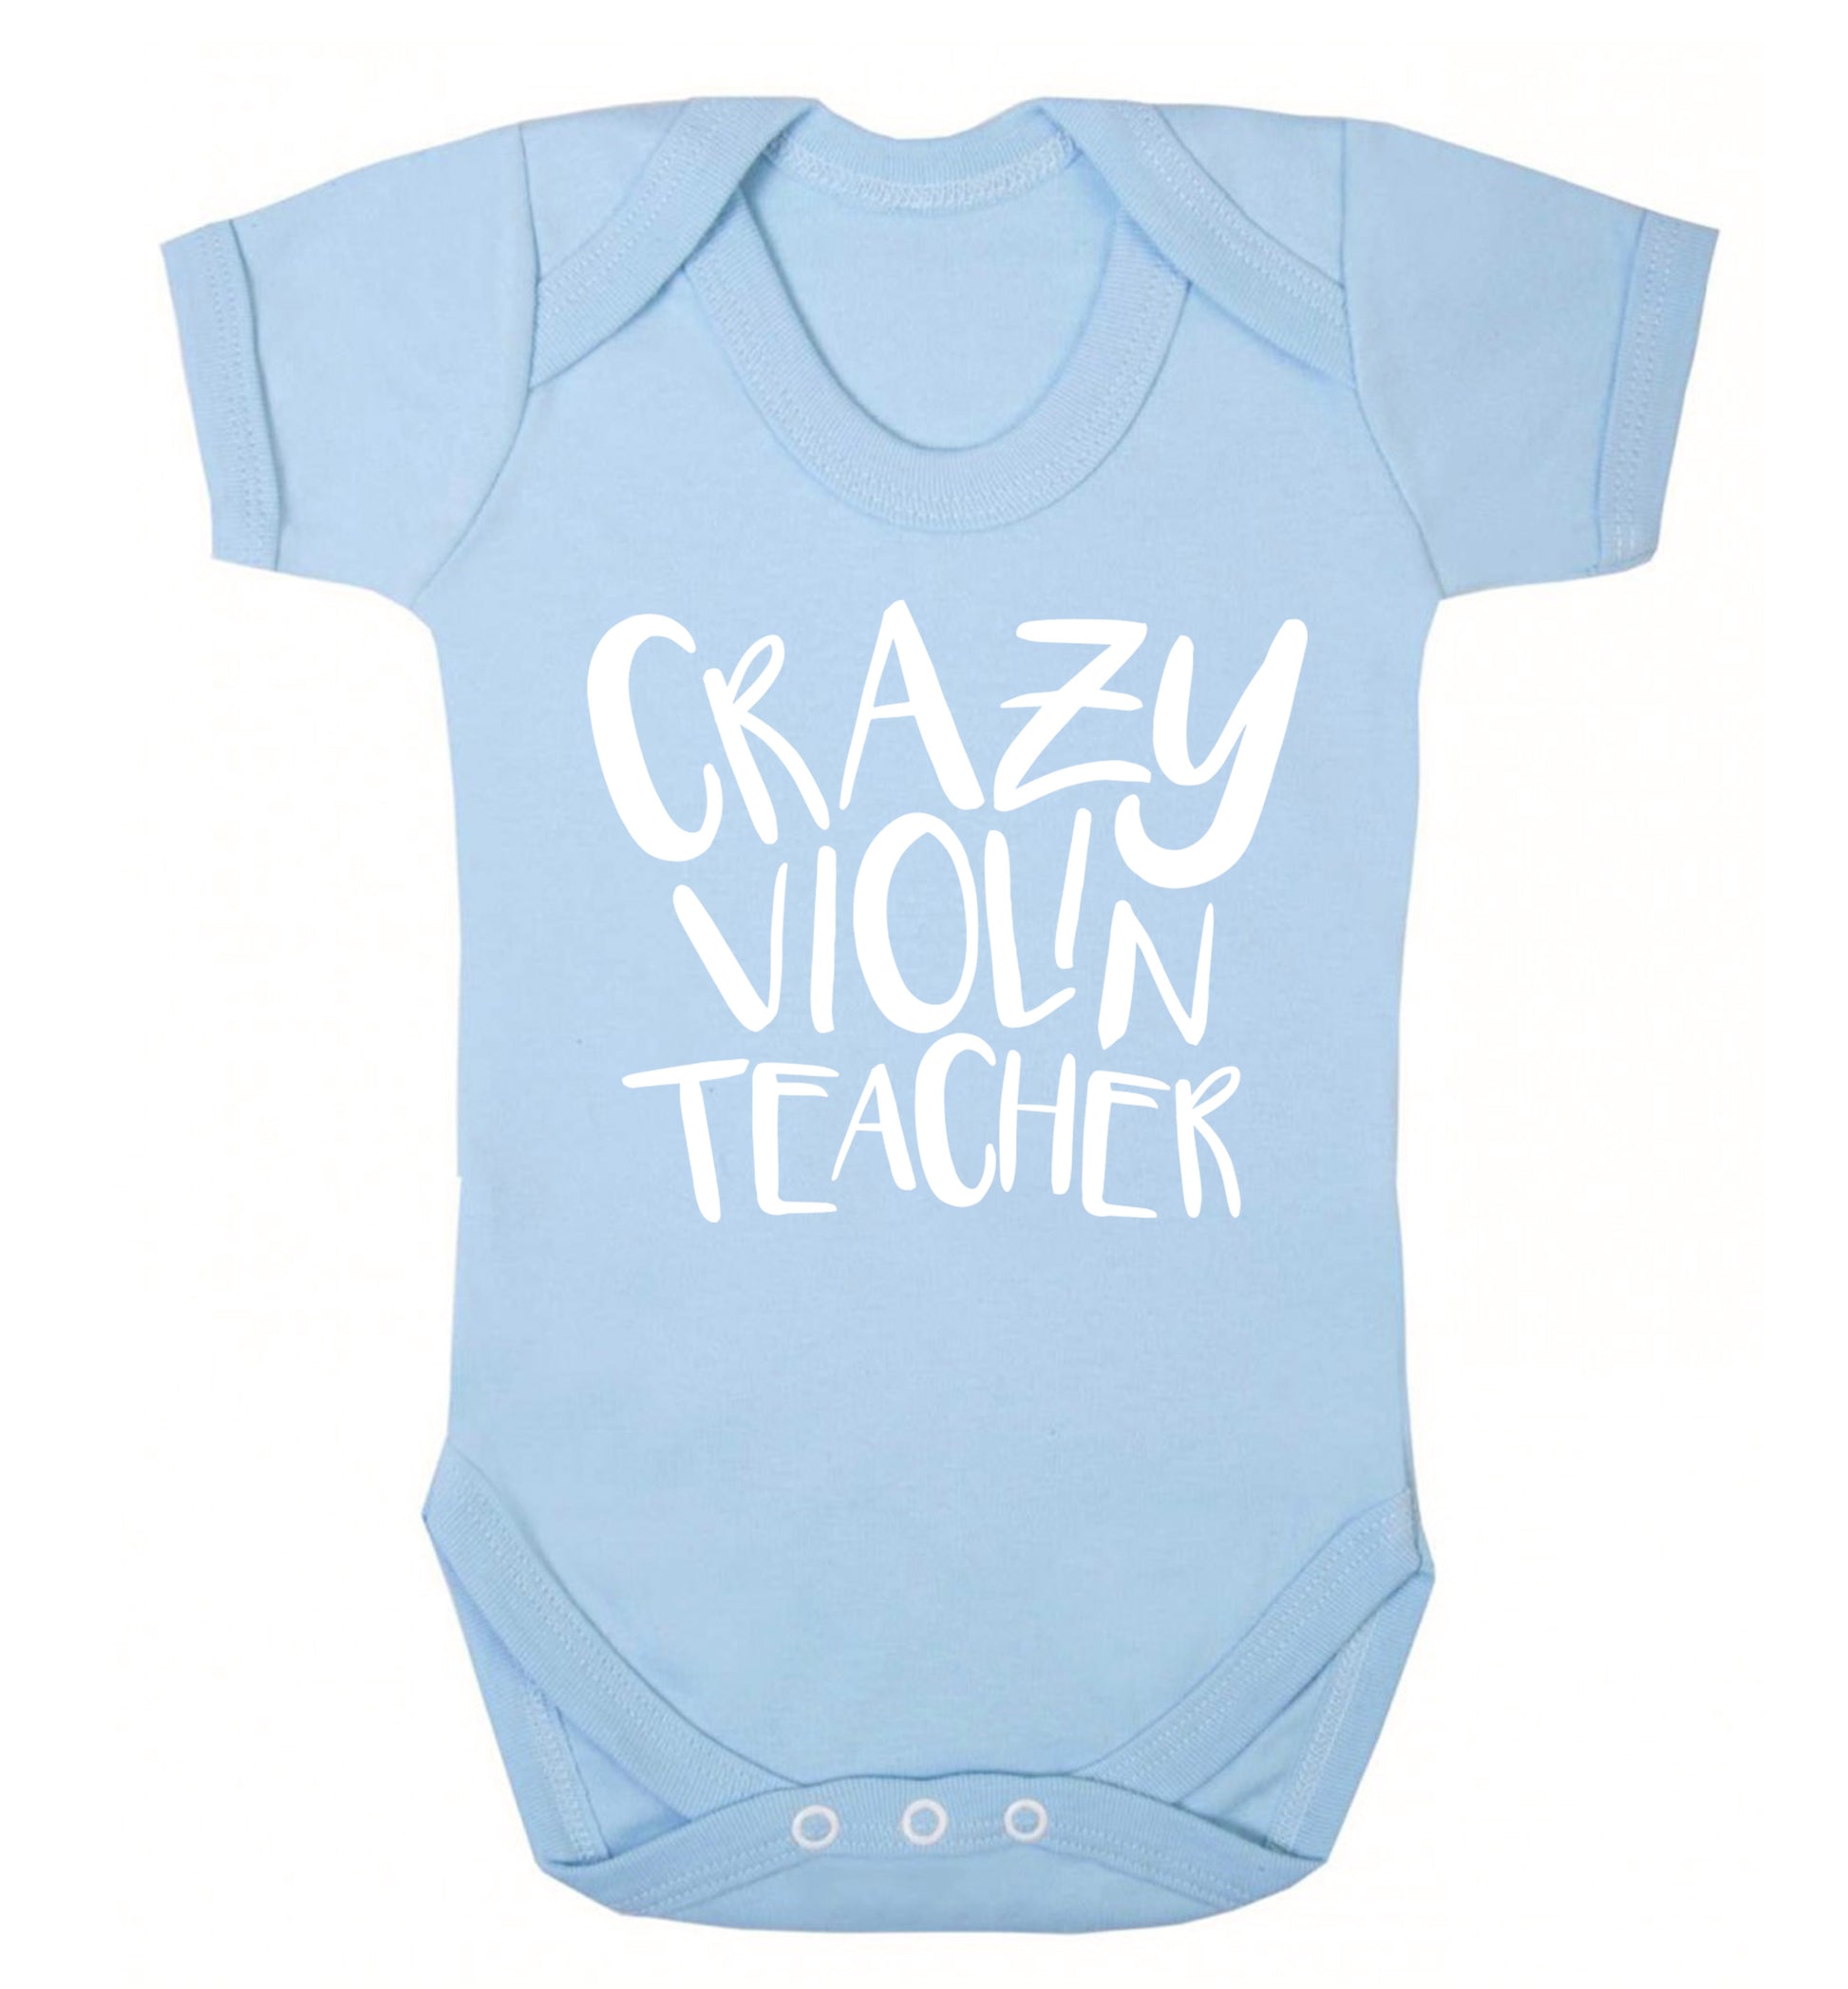 Crazy violin teacher Baby Vest pale blue 18-24 months